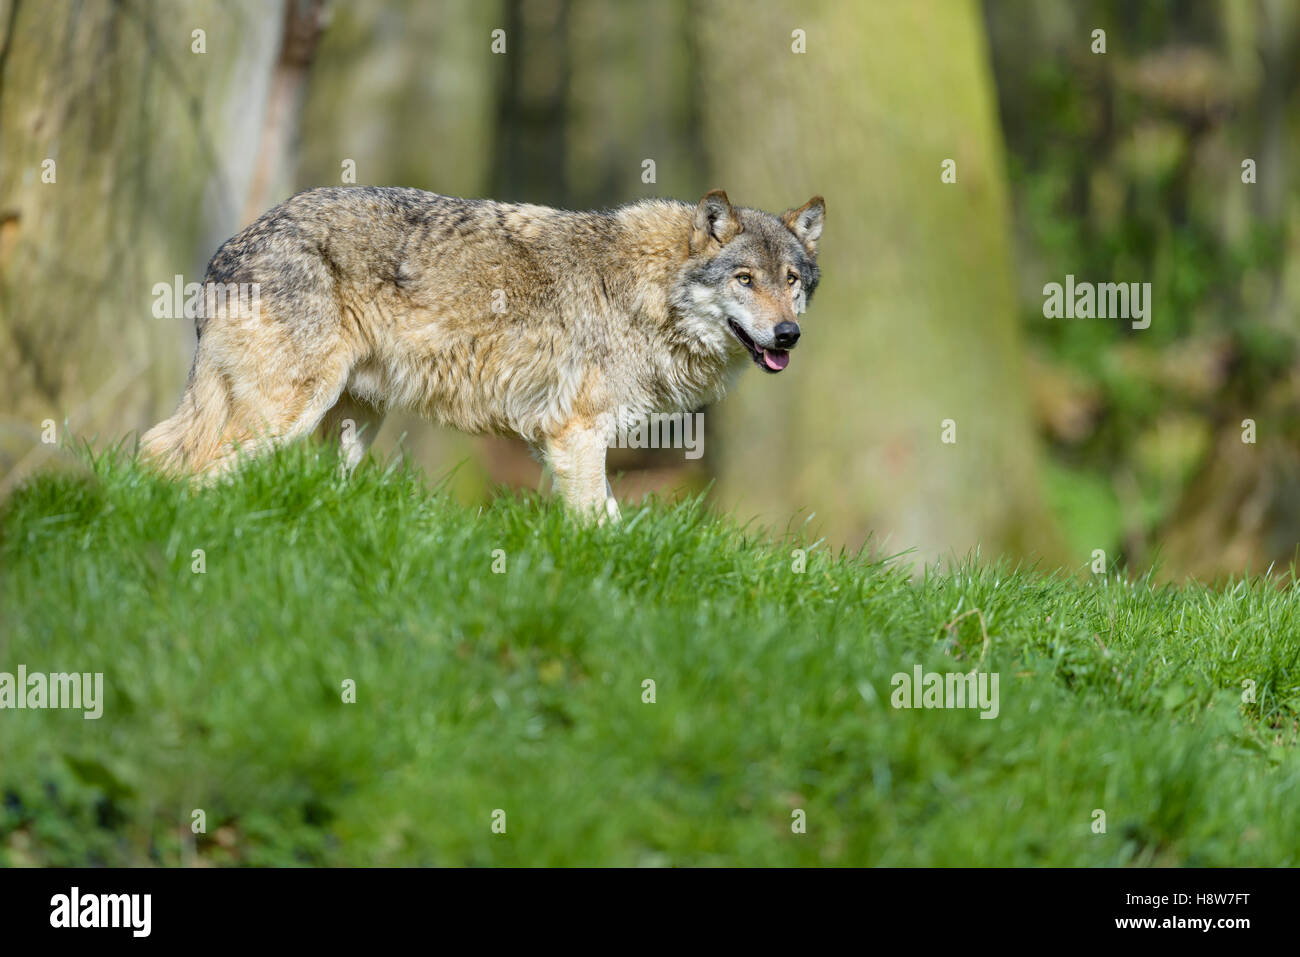 Europaeischer Lobo, canis lupus, el lobo gris europeo Foto de stock